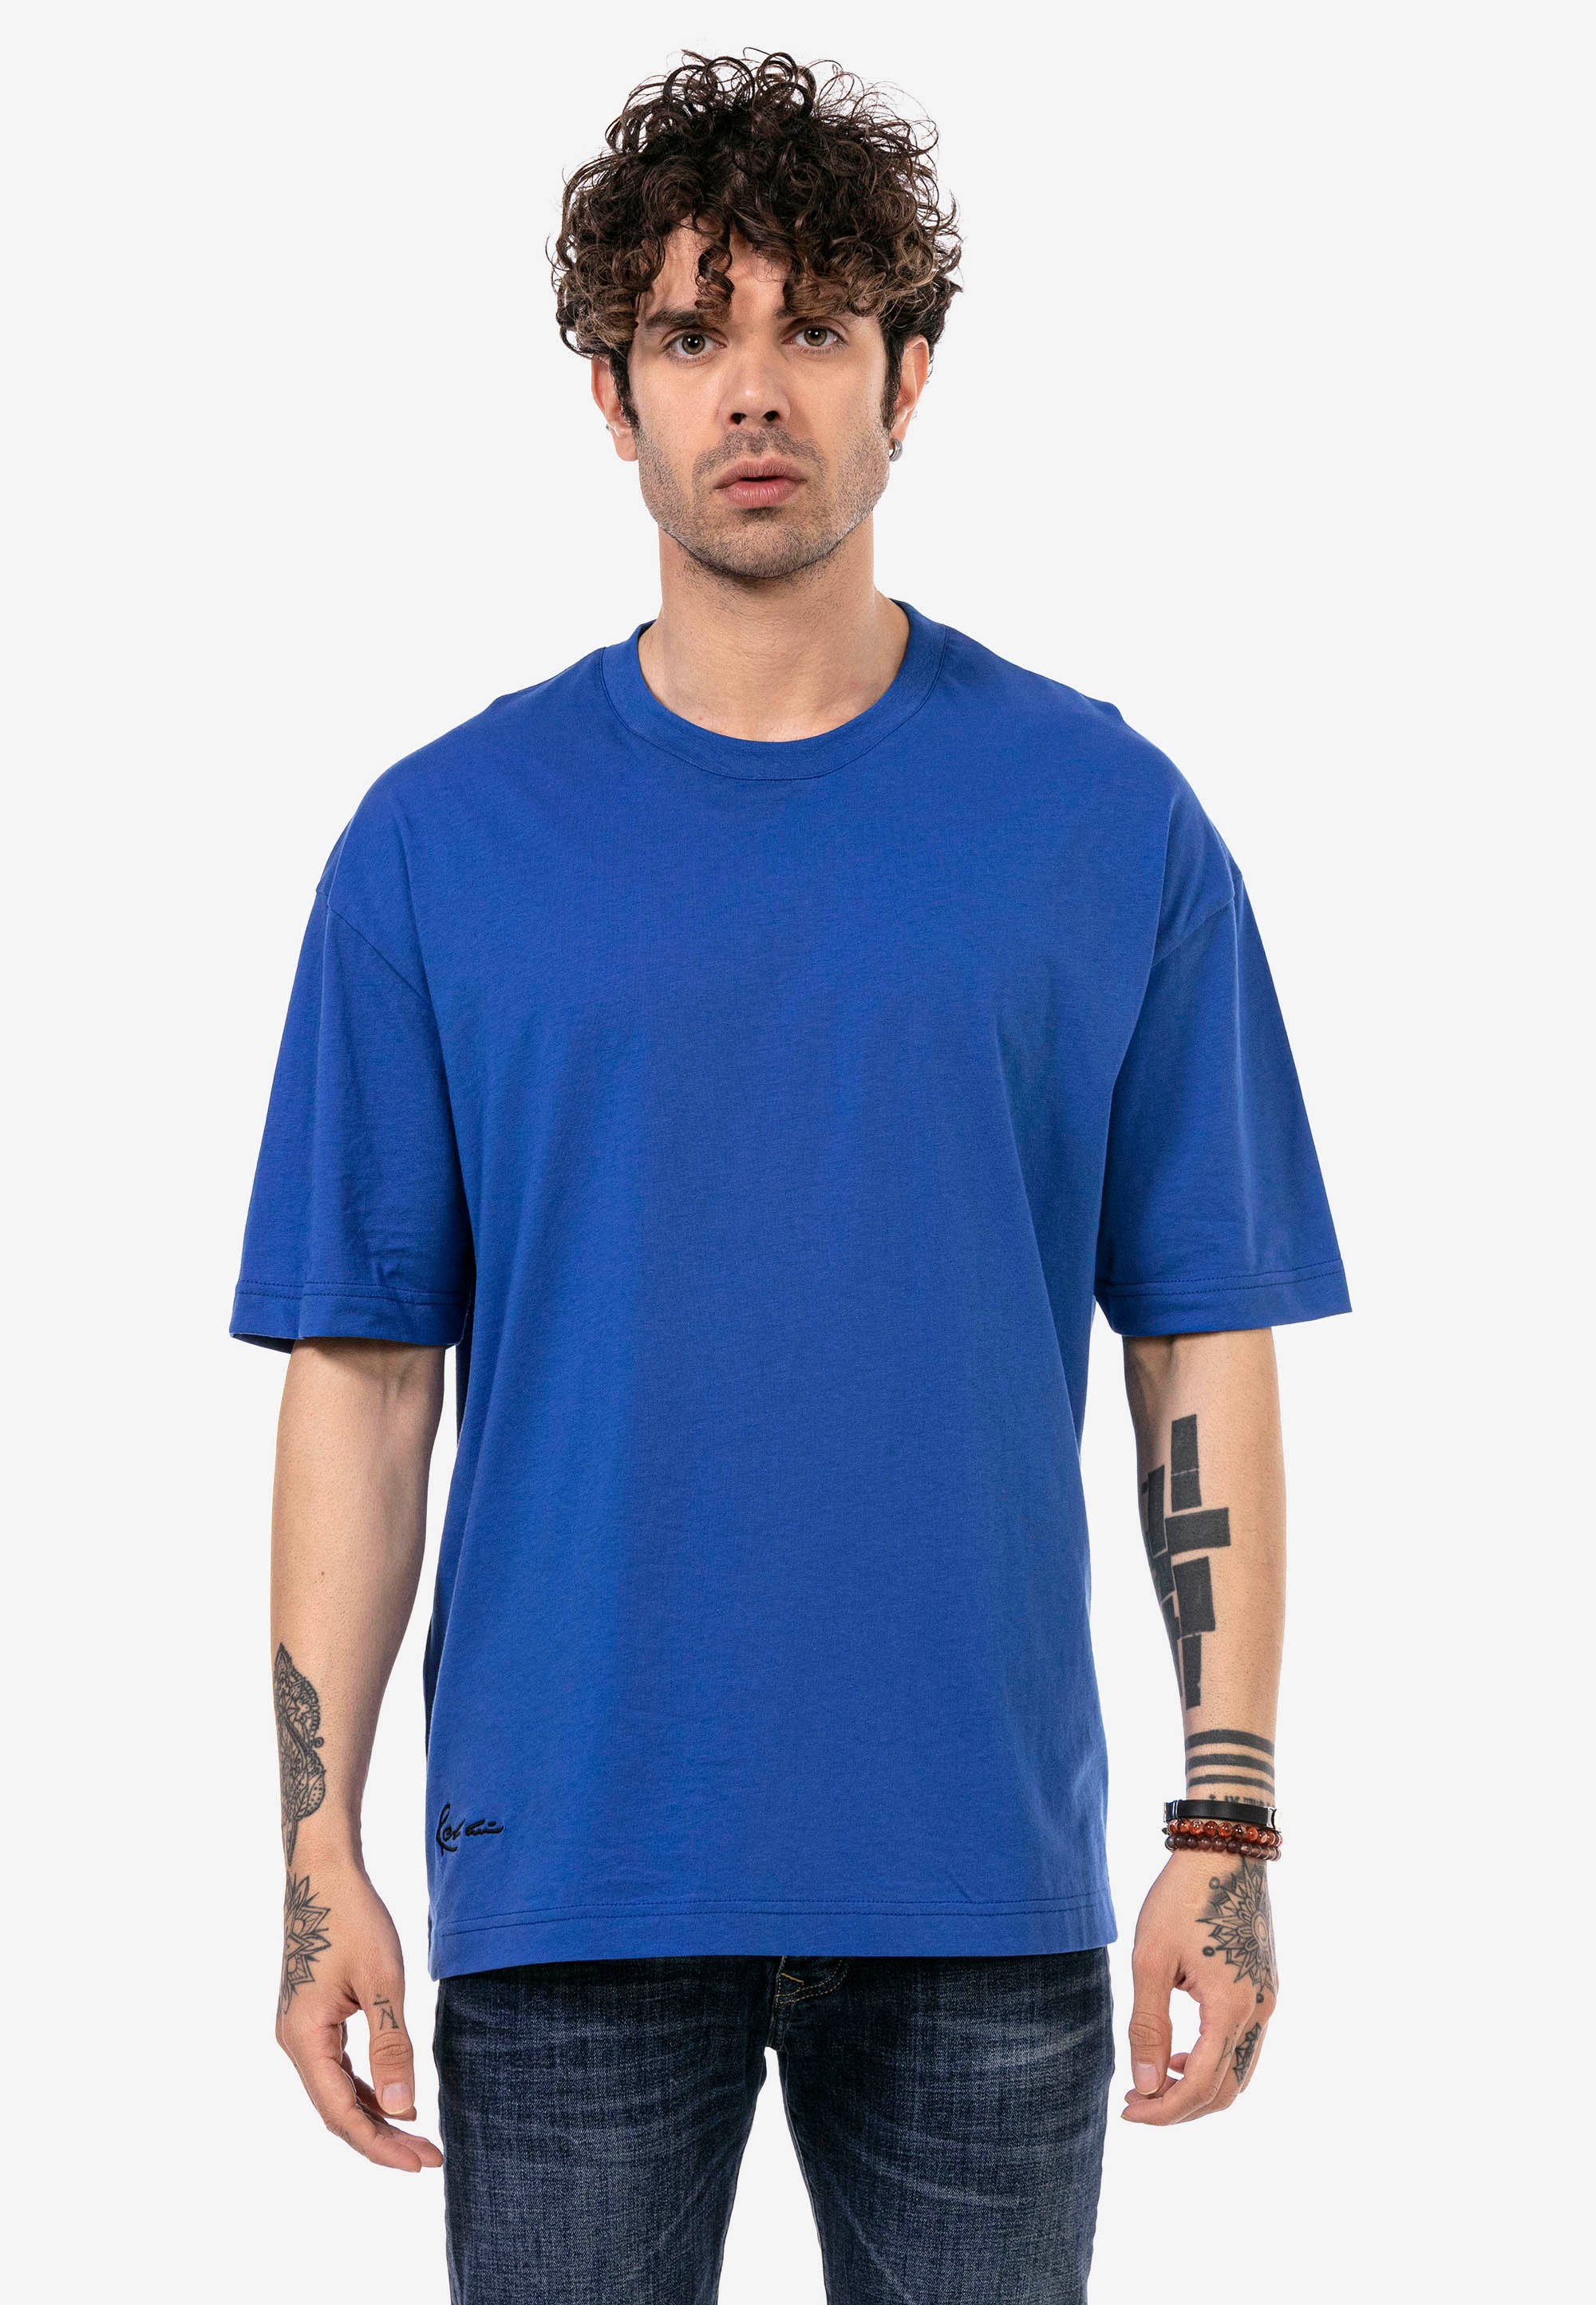 RedBridge T-Shirt im angesagten Oversize-Schnitt blau